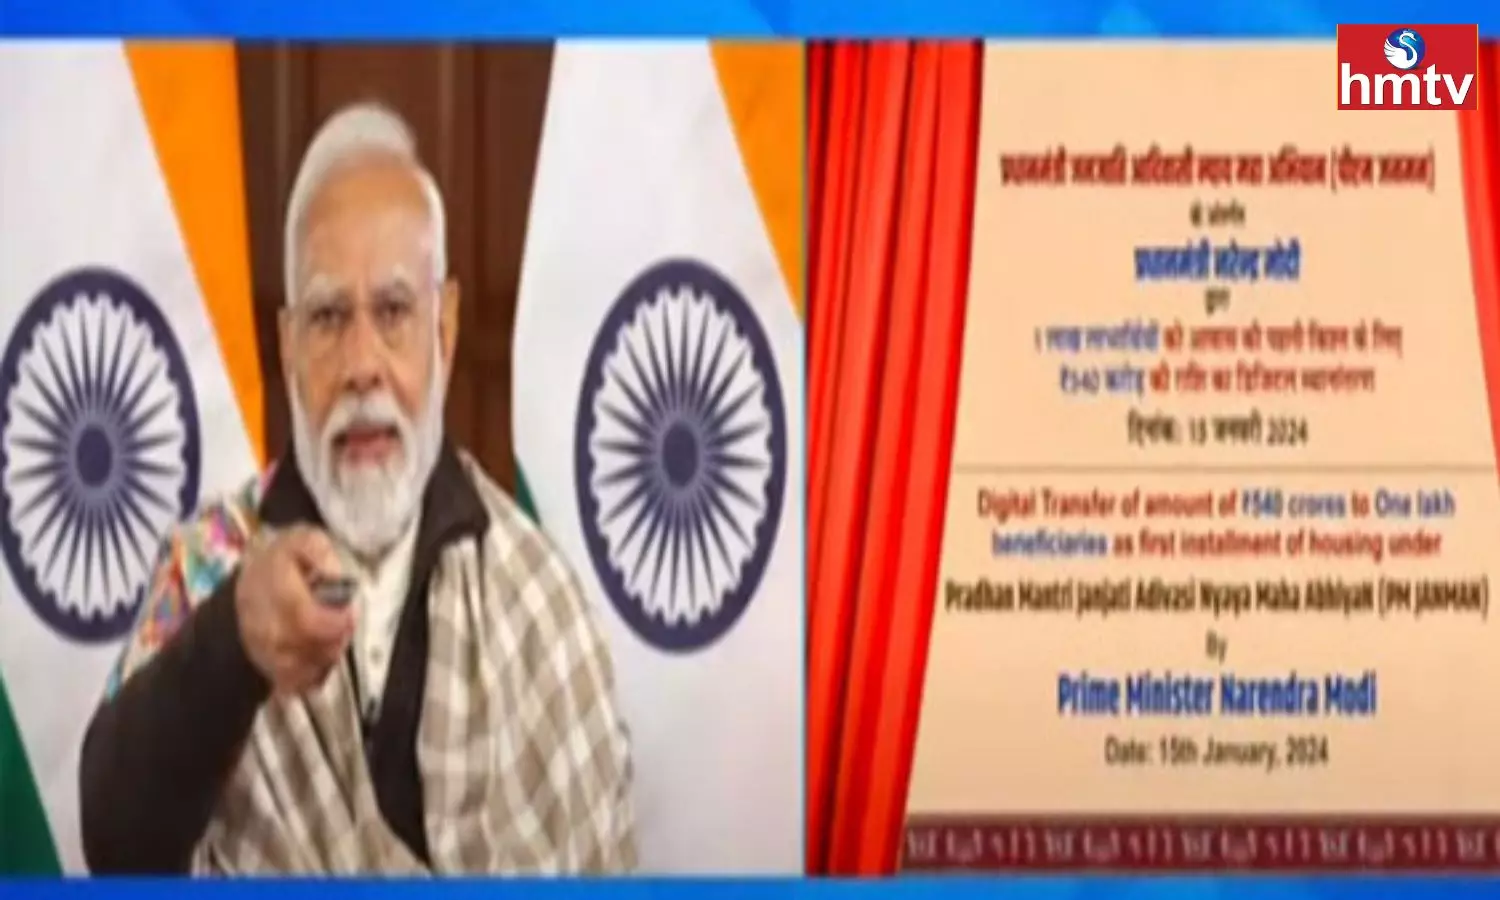 Prime Minister Modi launched the PM Janman scheme